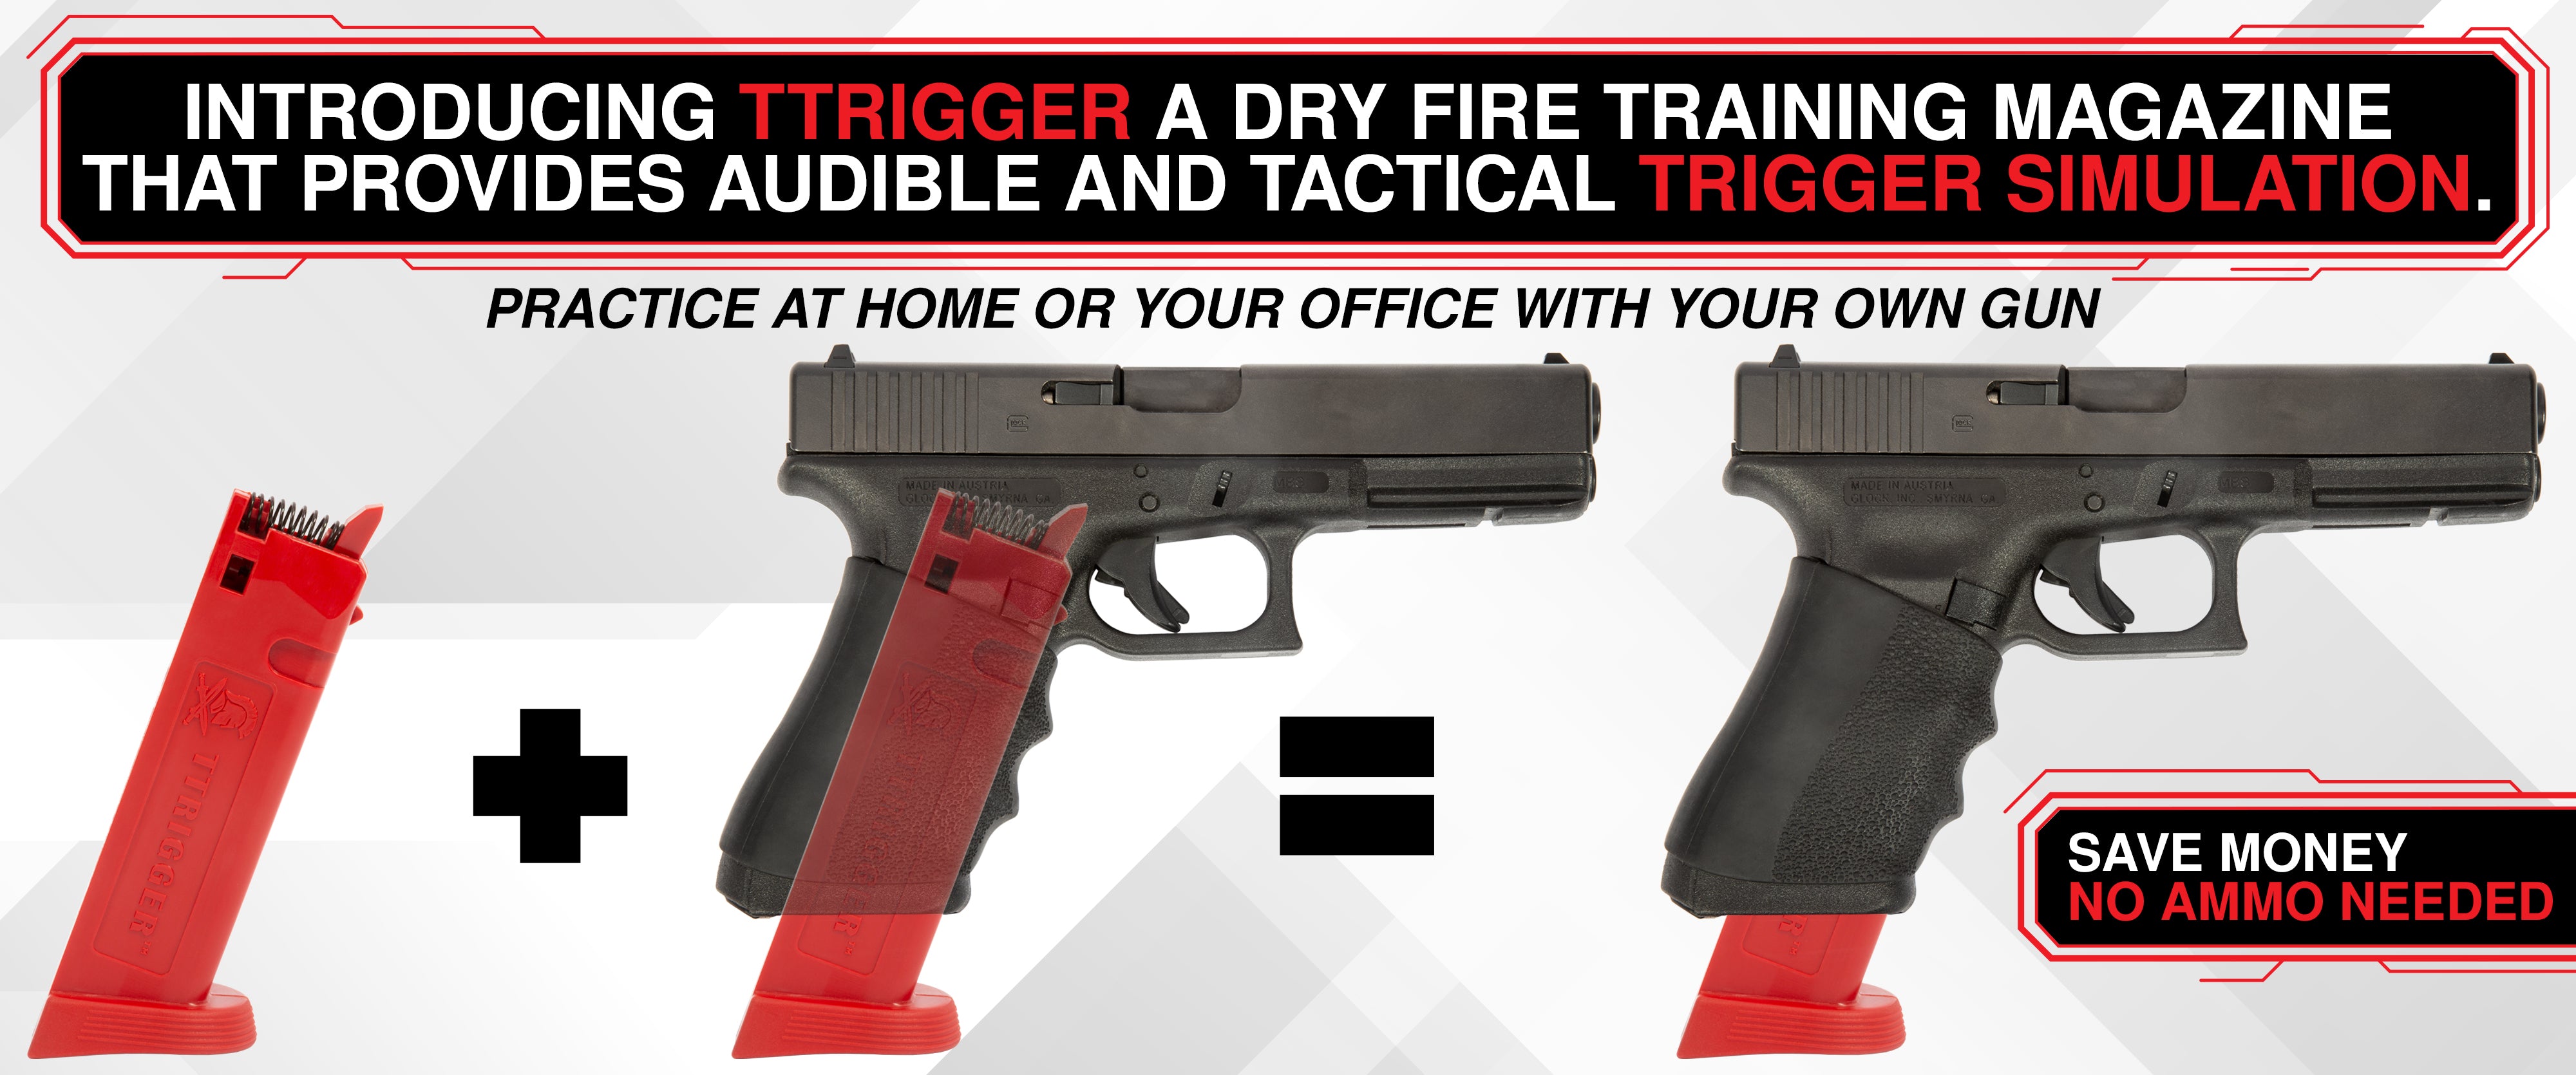 dry fire mag Training magazine  